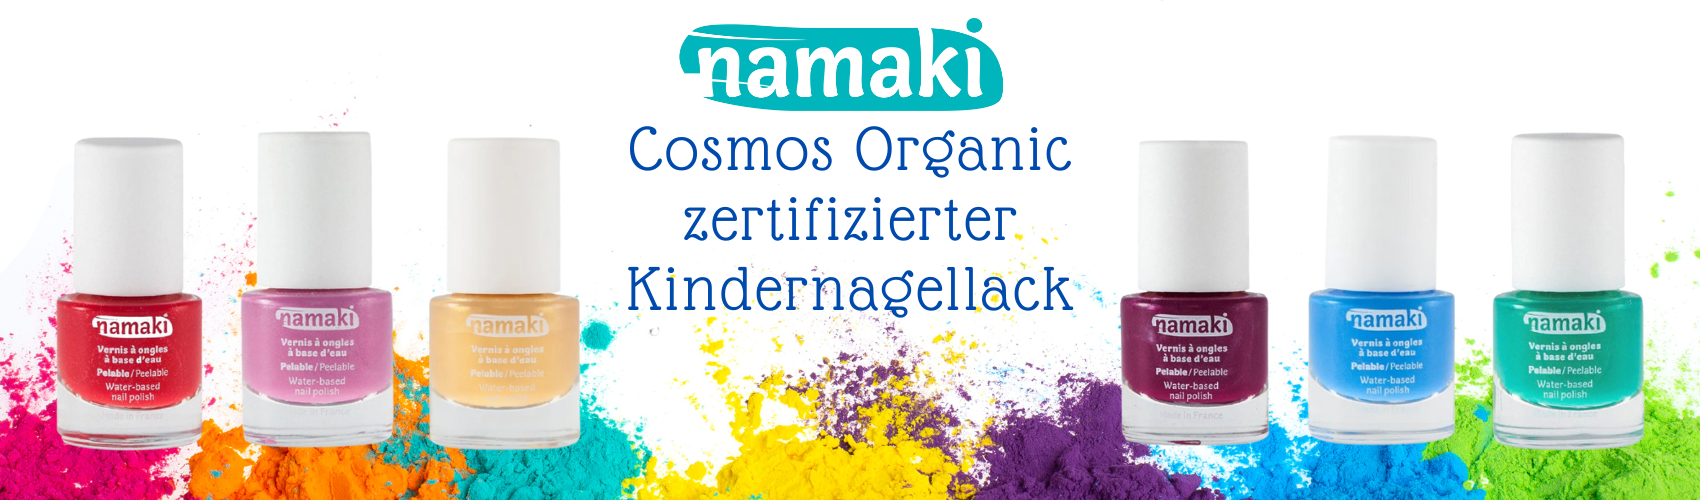 namaki Bio Kindernagellack